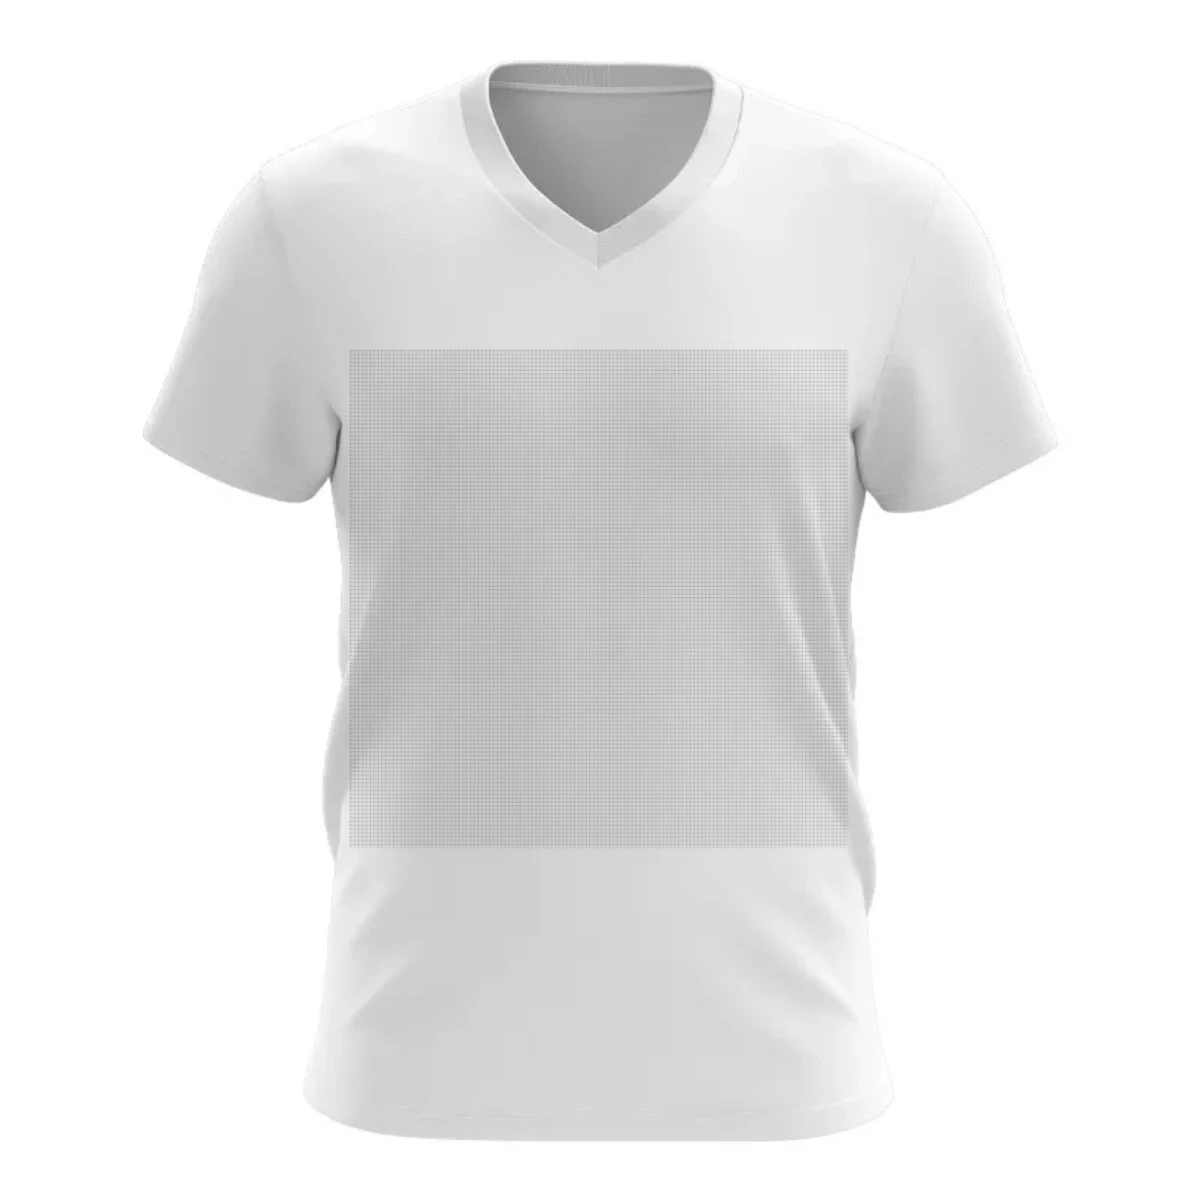 Online Shopping Wholesale Clothing Men 3D Printed Graphic T-Shirt Custom Design Kids Teenagers Short Sleeve Tee Shirts